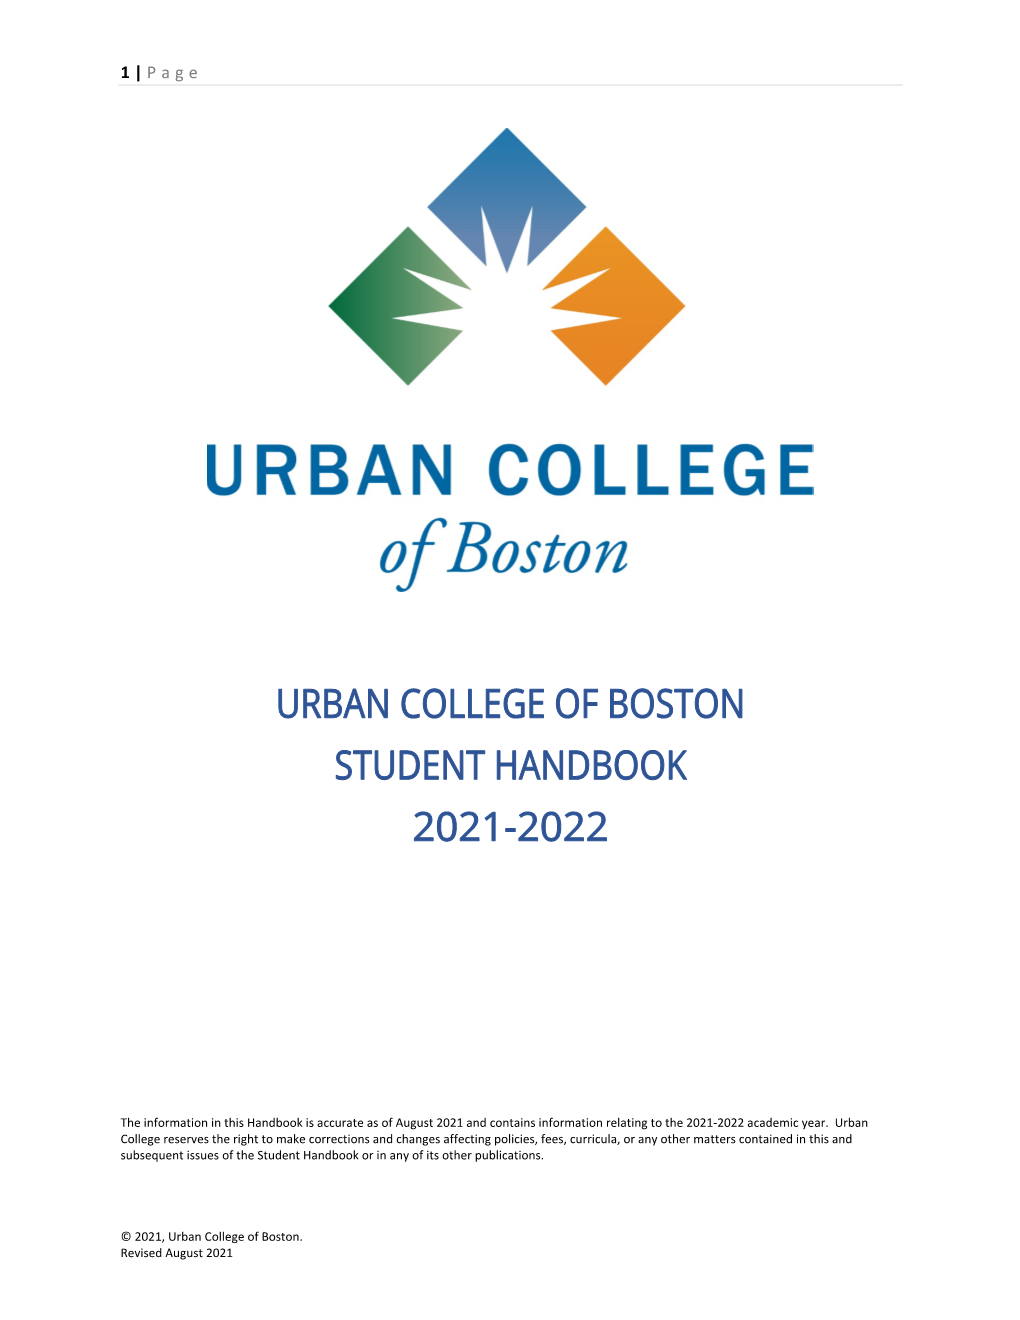 Urban College of Boston Student Handbook 2021-2022